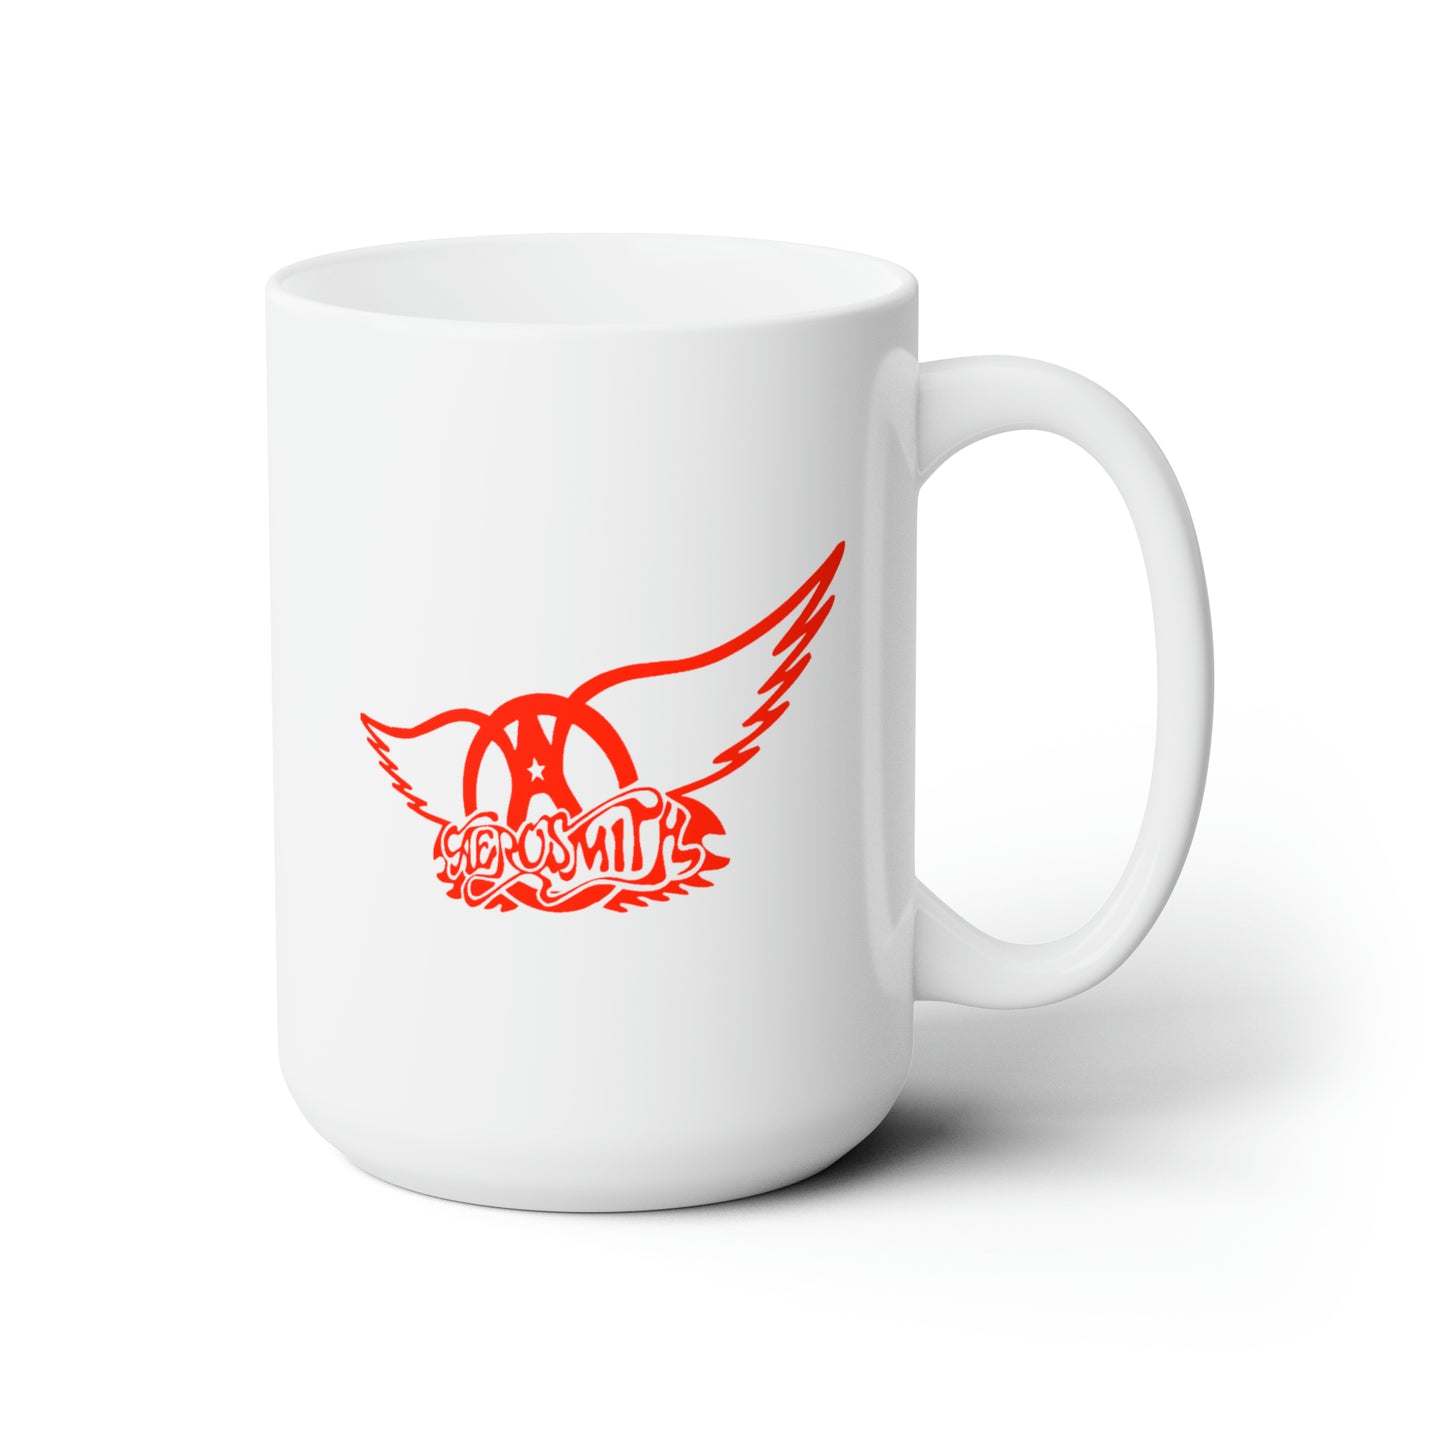 Aerosmith Coffee Mug - Double Sided White Ceramic 15oz by TheGlassyLass.com